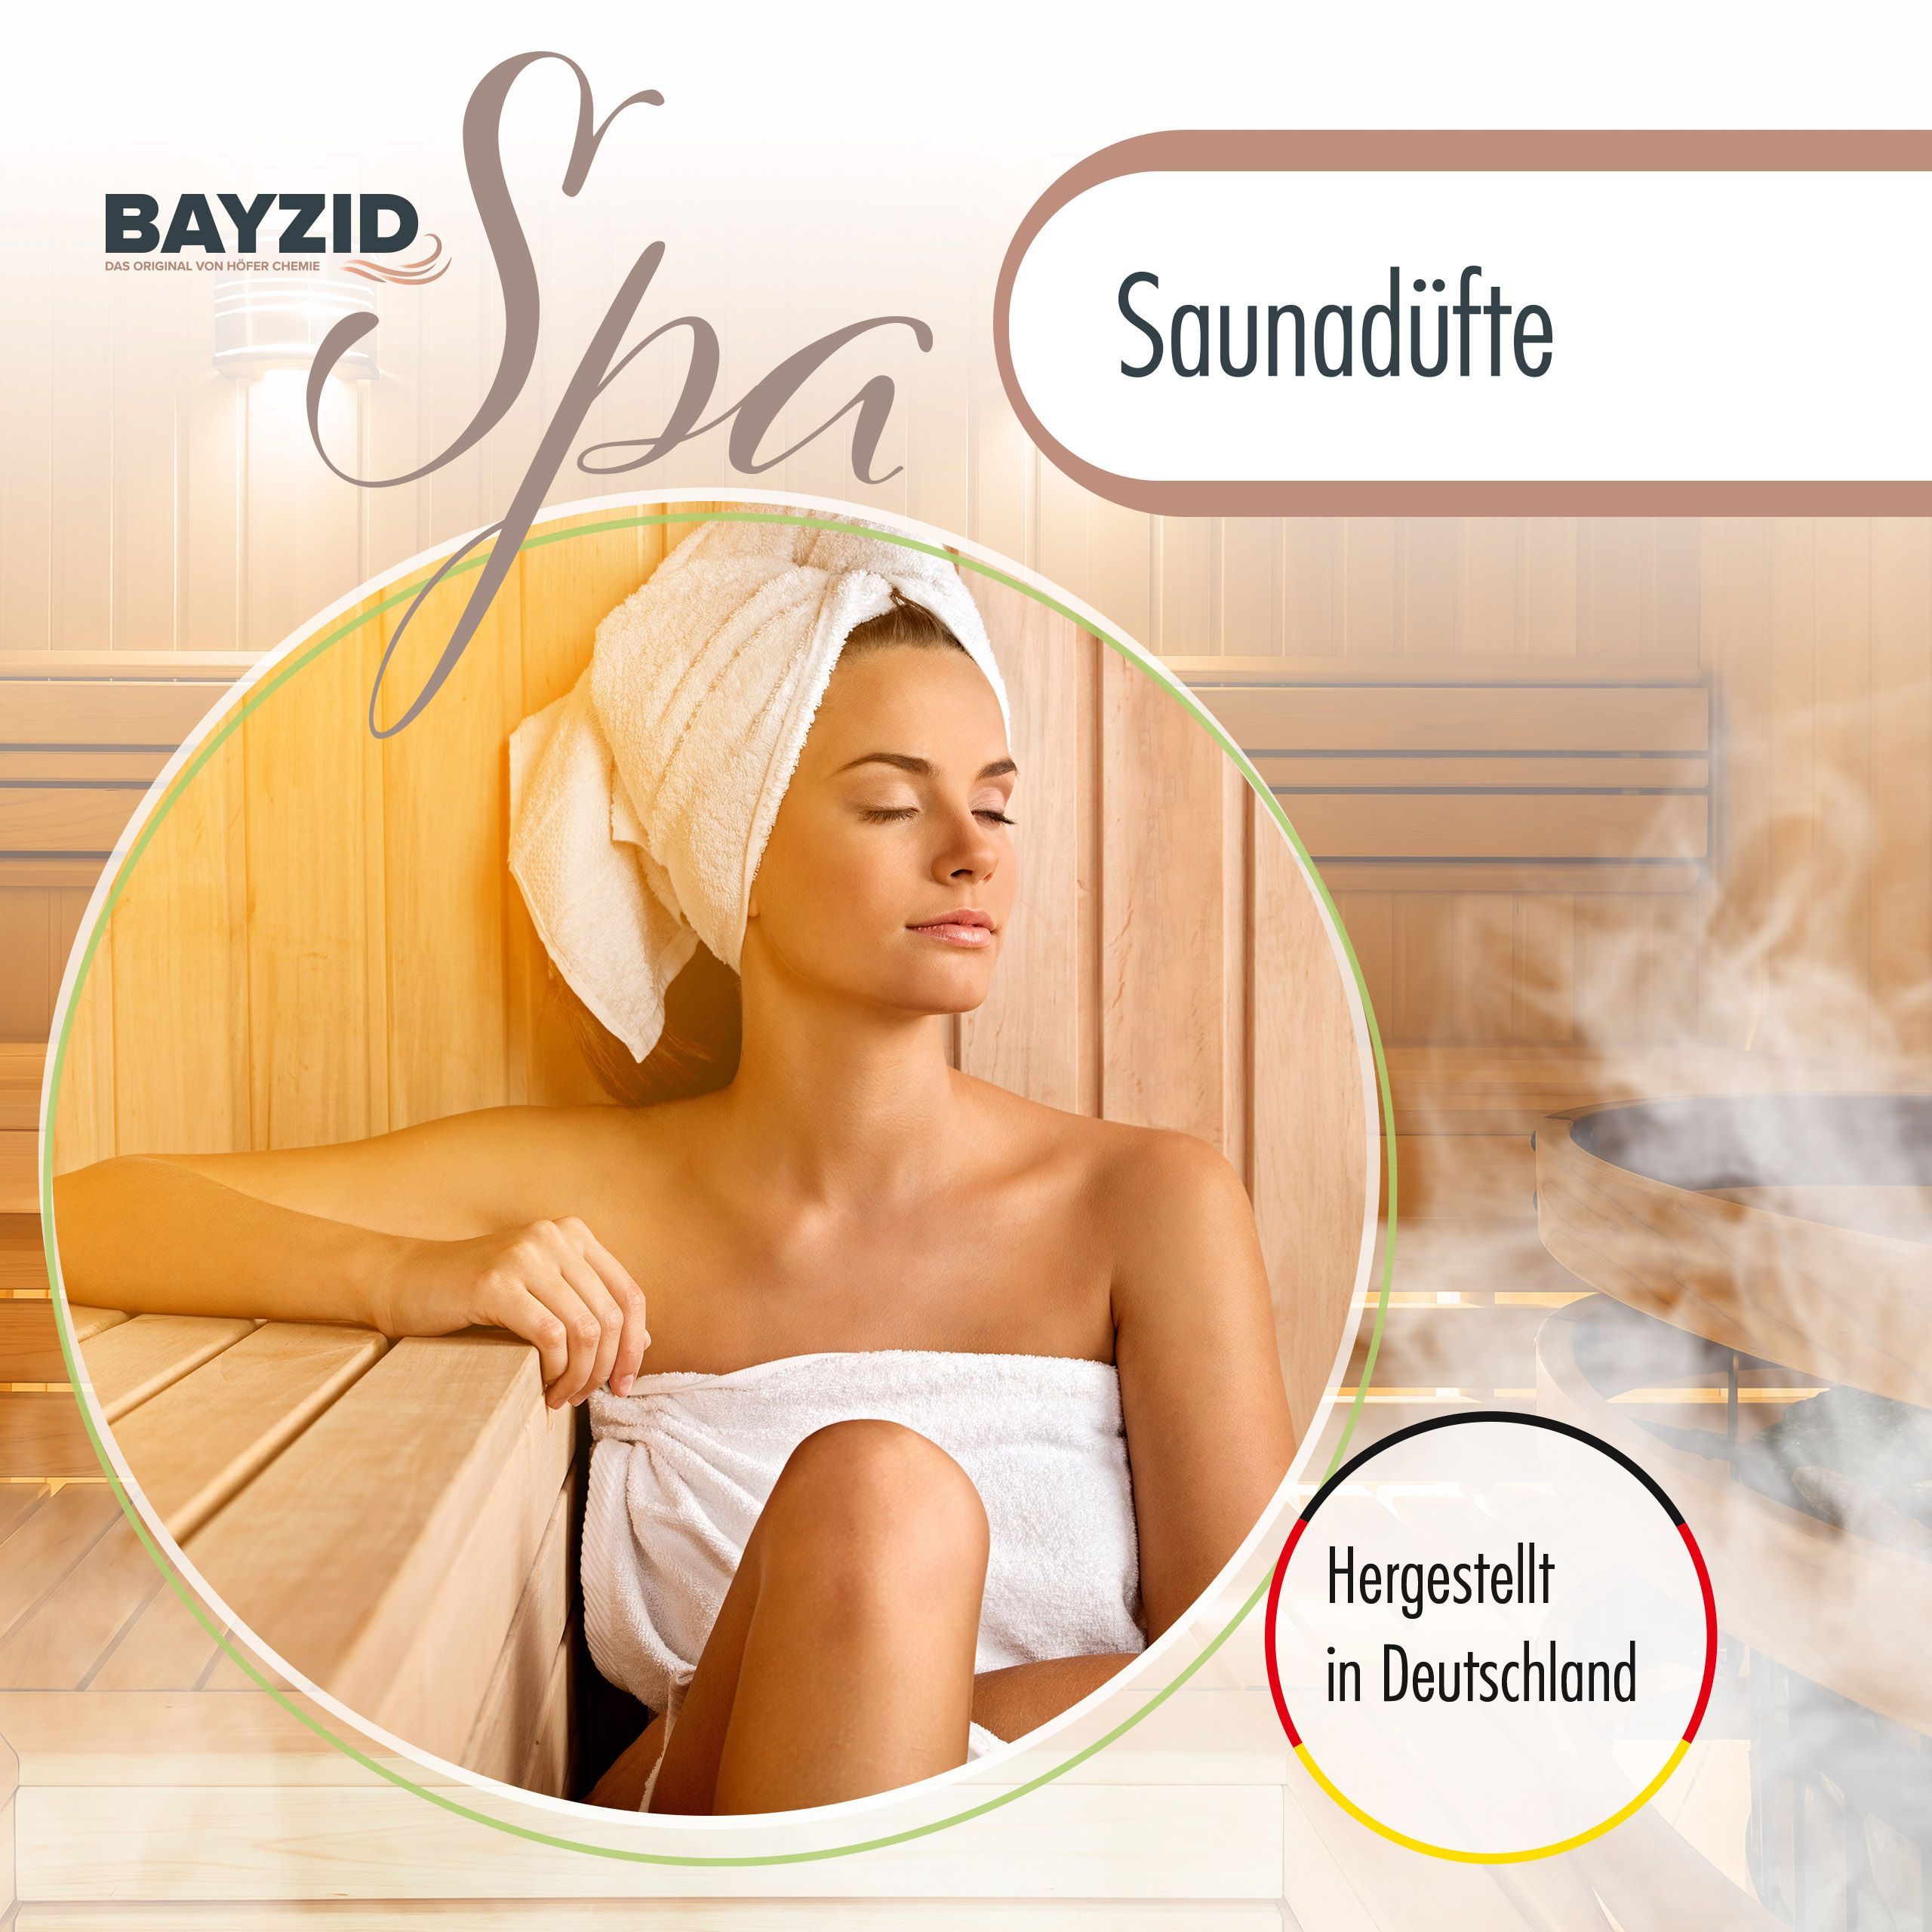 4 x 100 ml Set de parfum bio pour sauna BAYZID® SPA